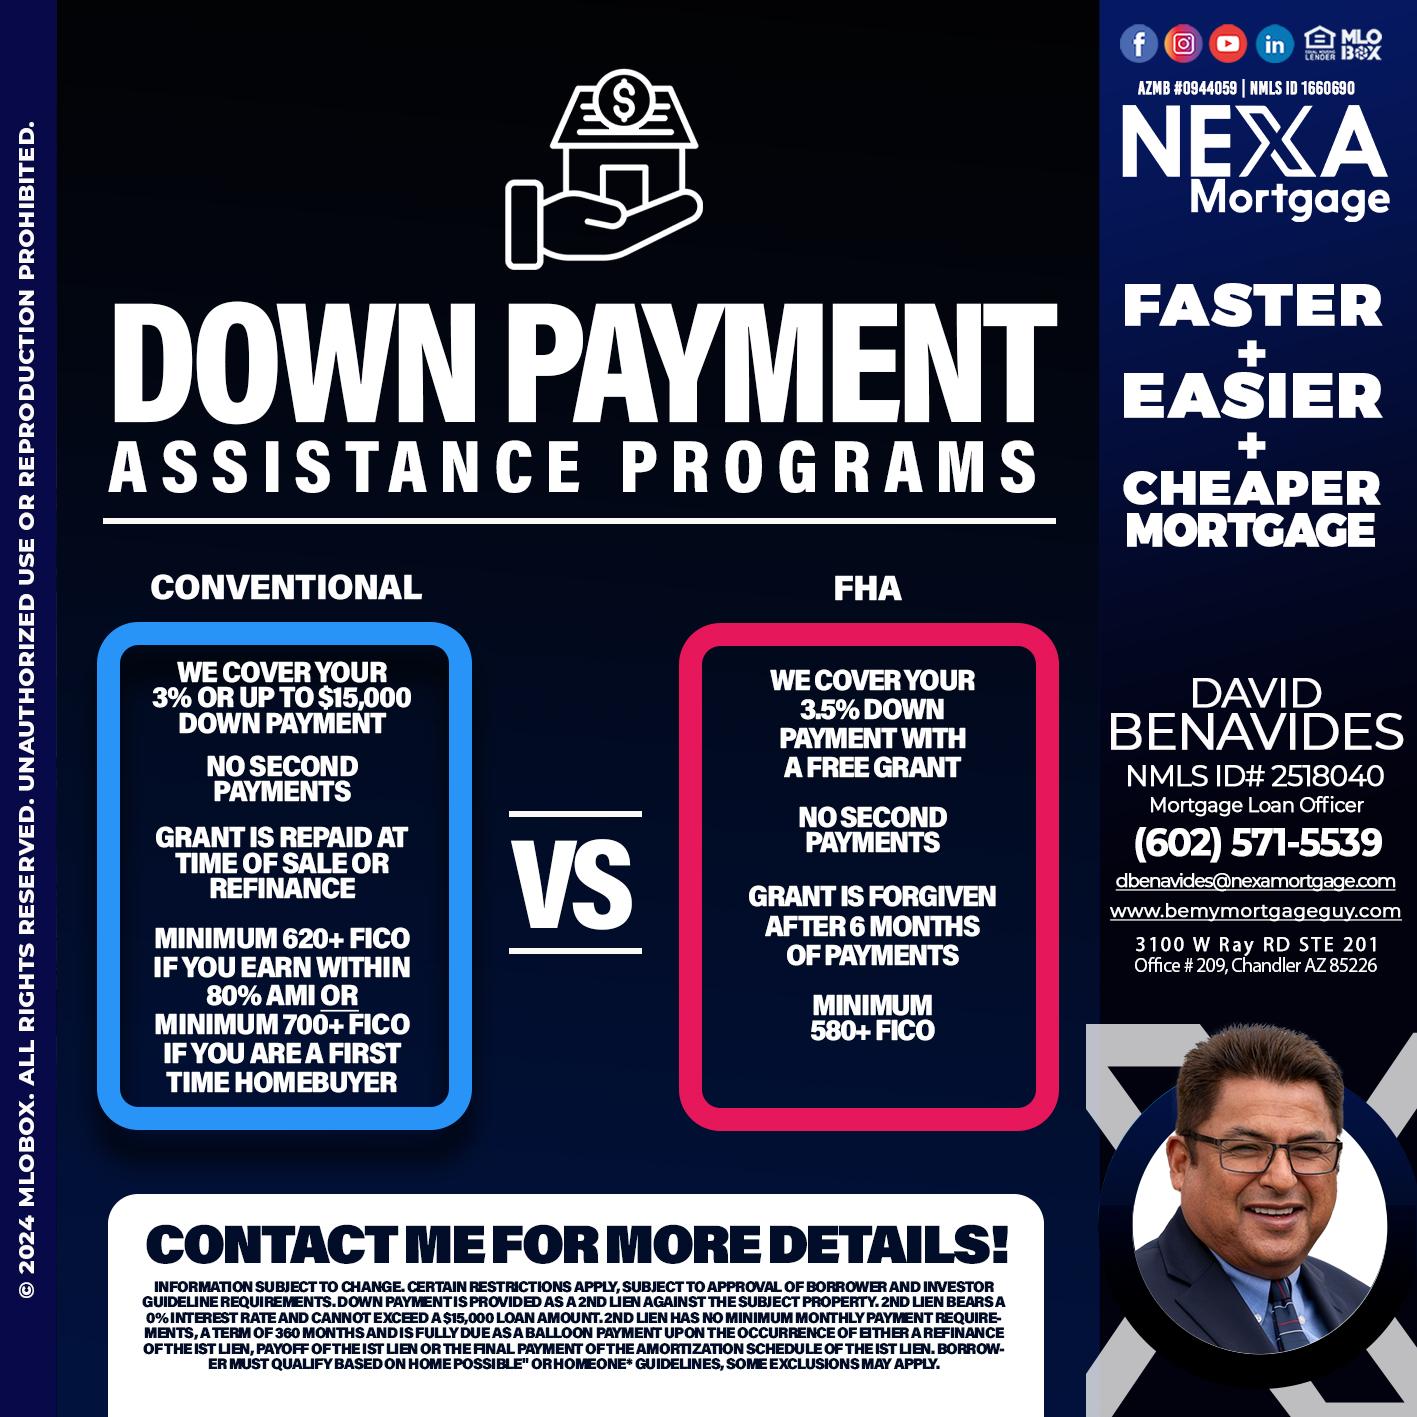 DOWN PAYMENT - David Benavides -Mortgage Loan Officer